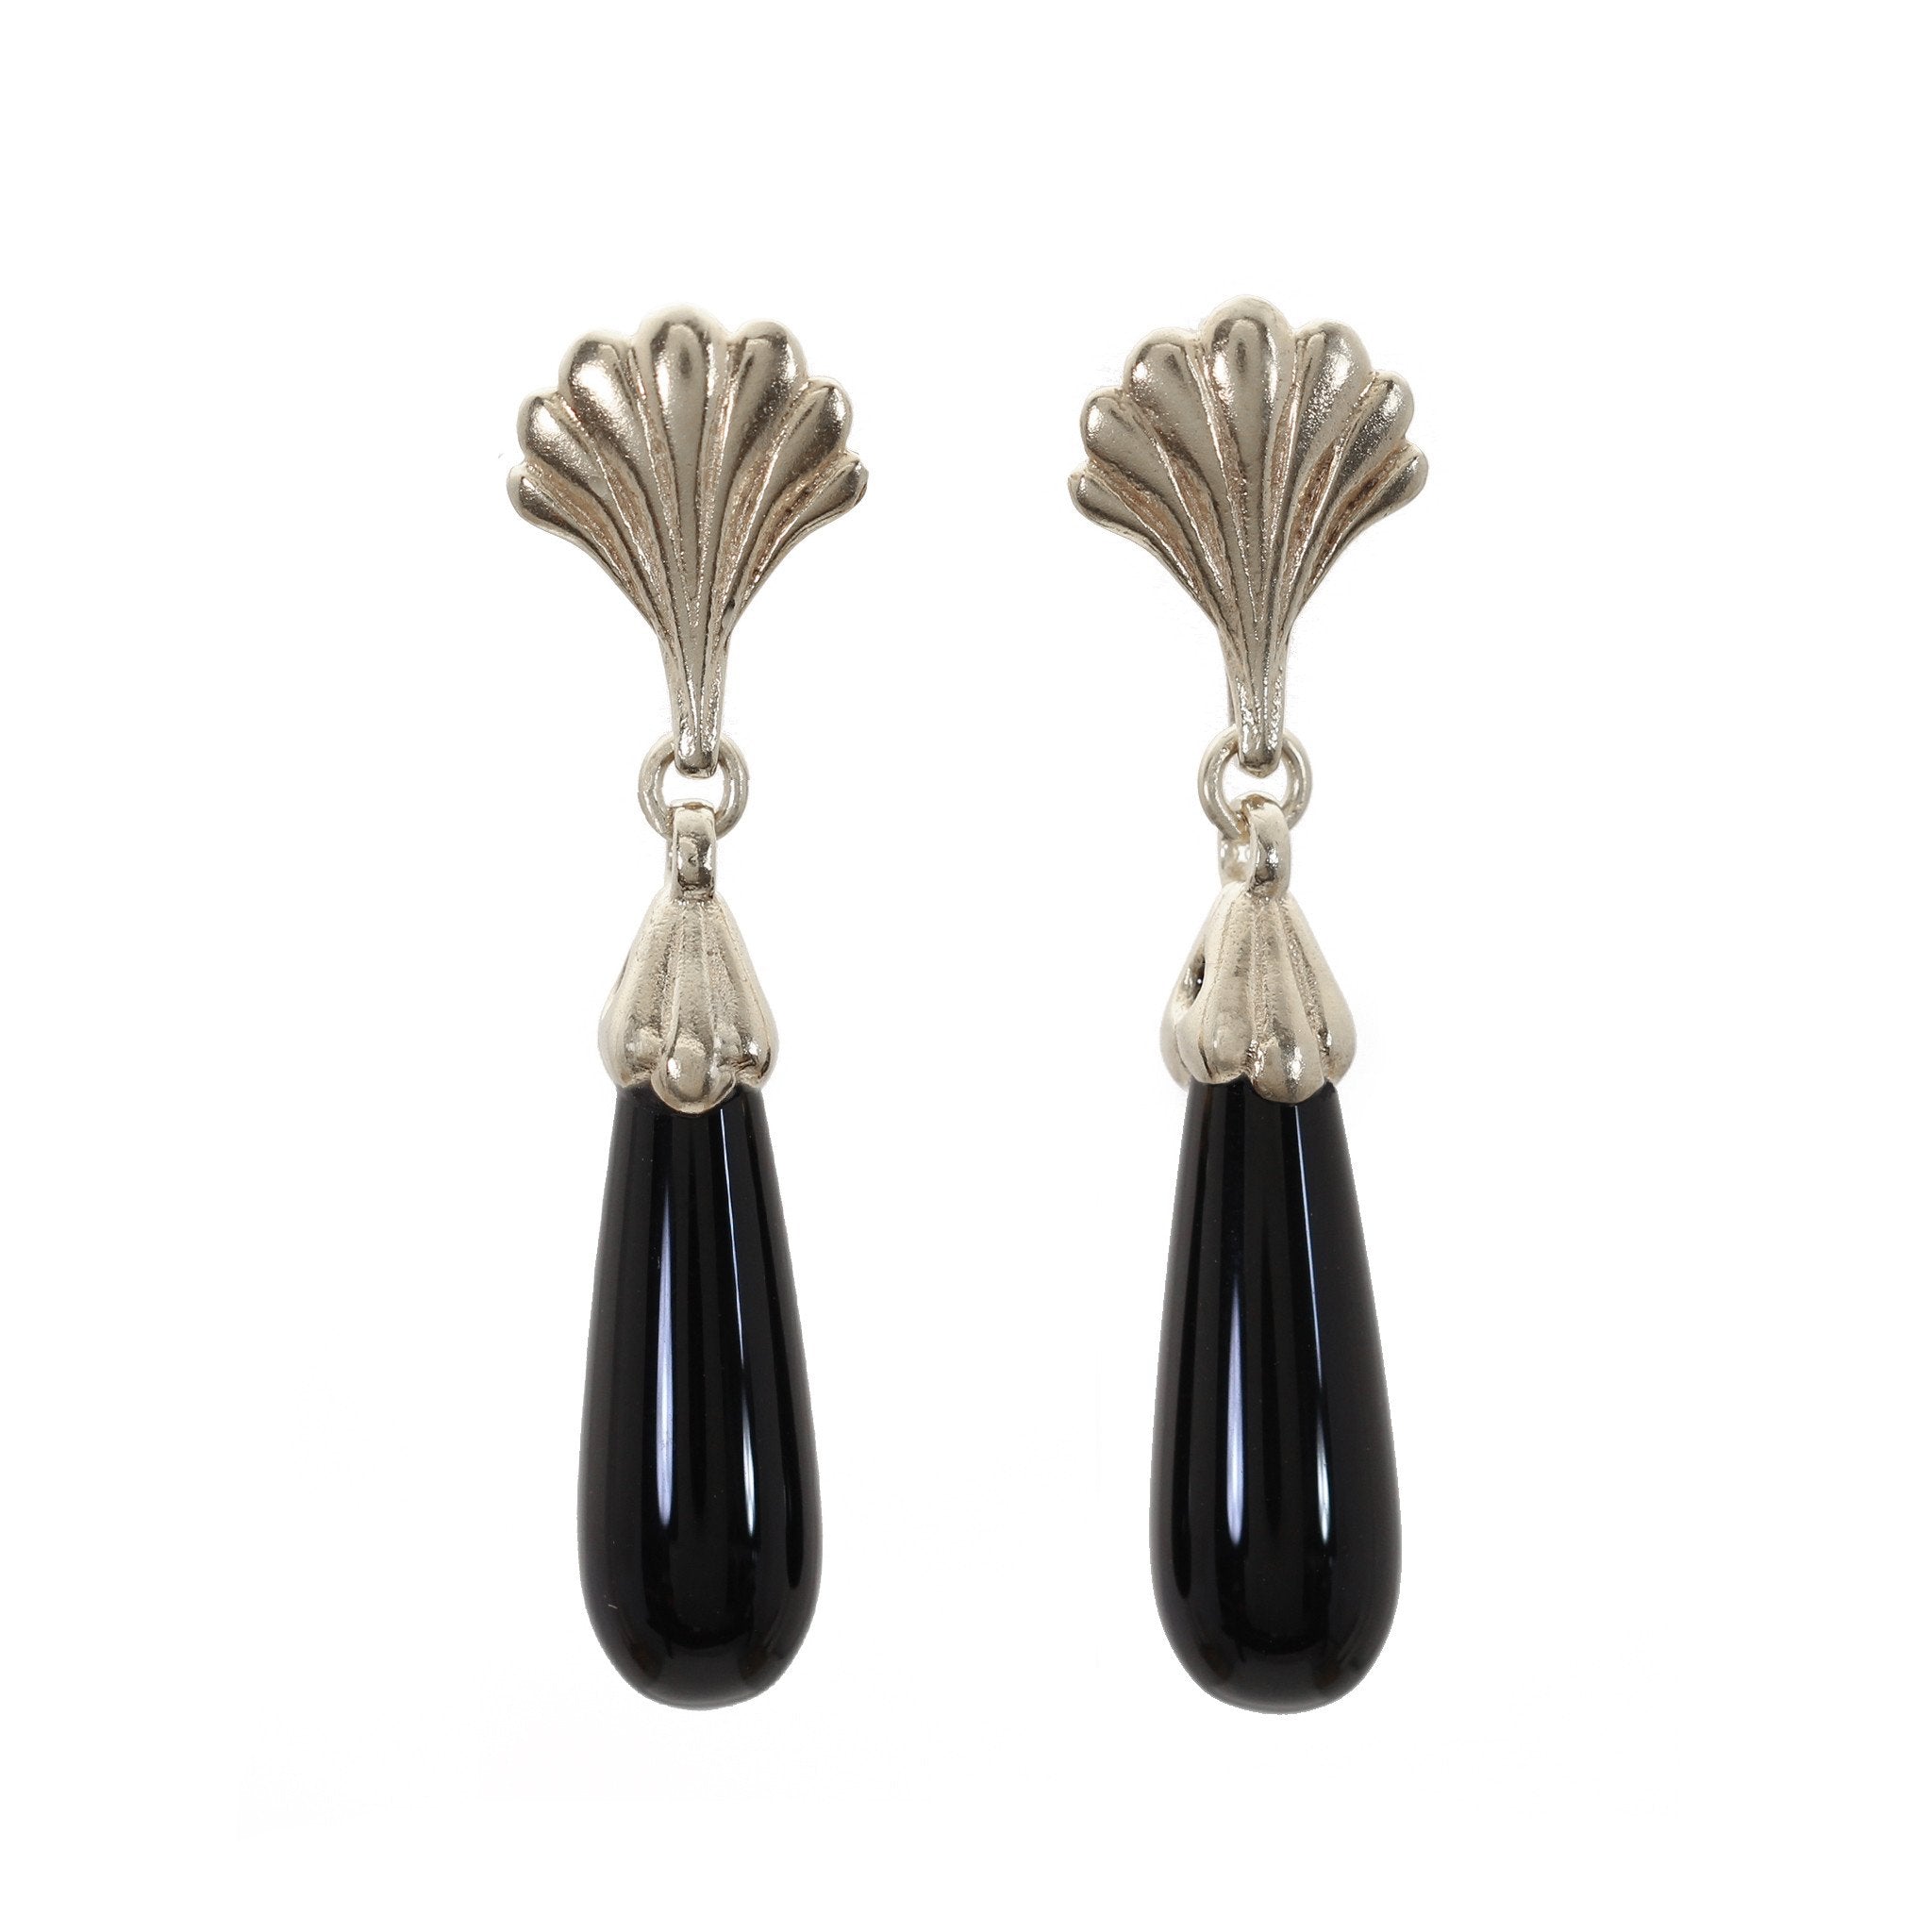 Sterling silver and black onyx drop earrings